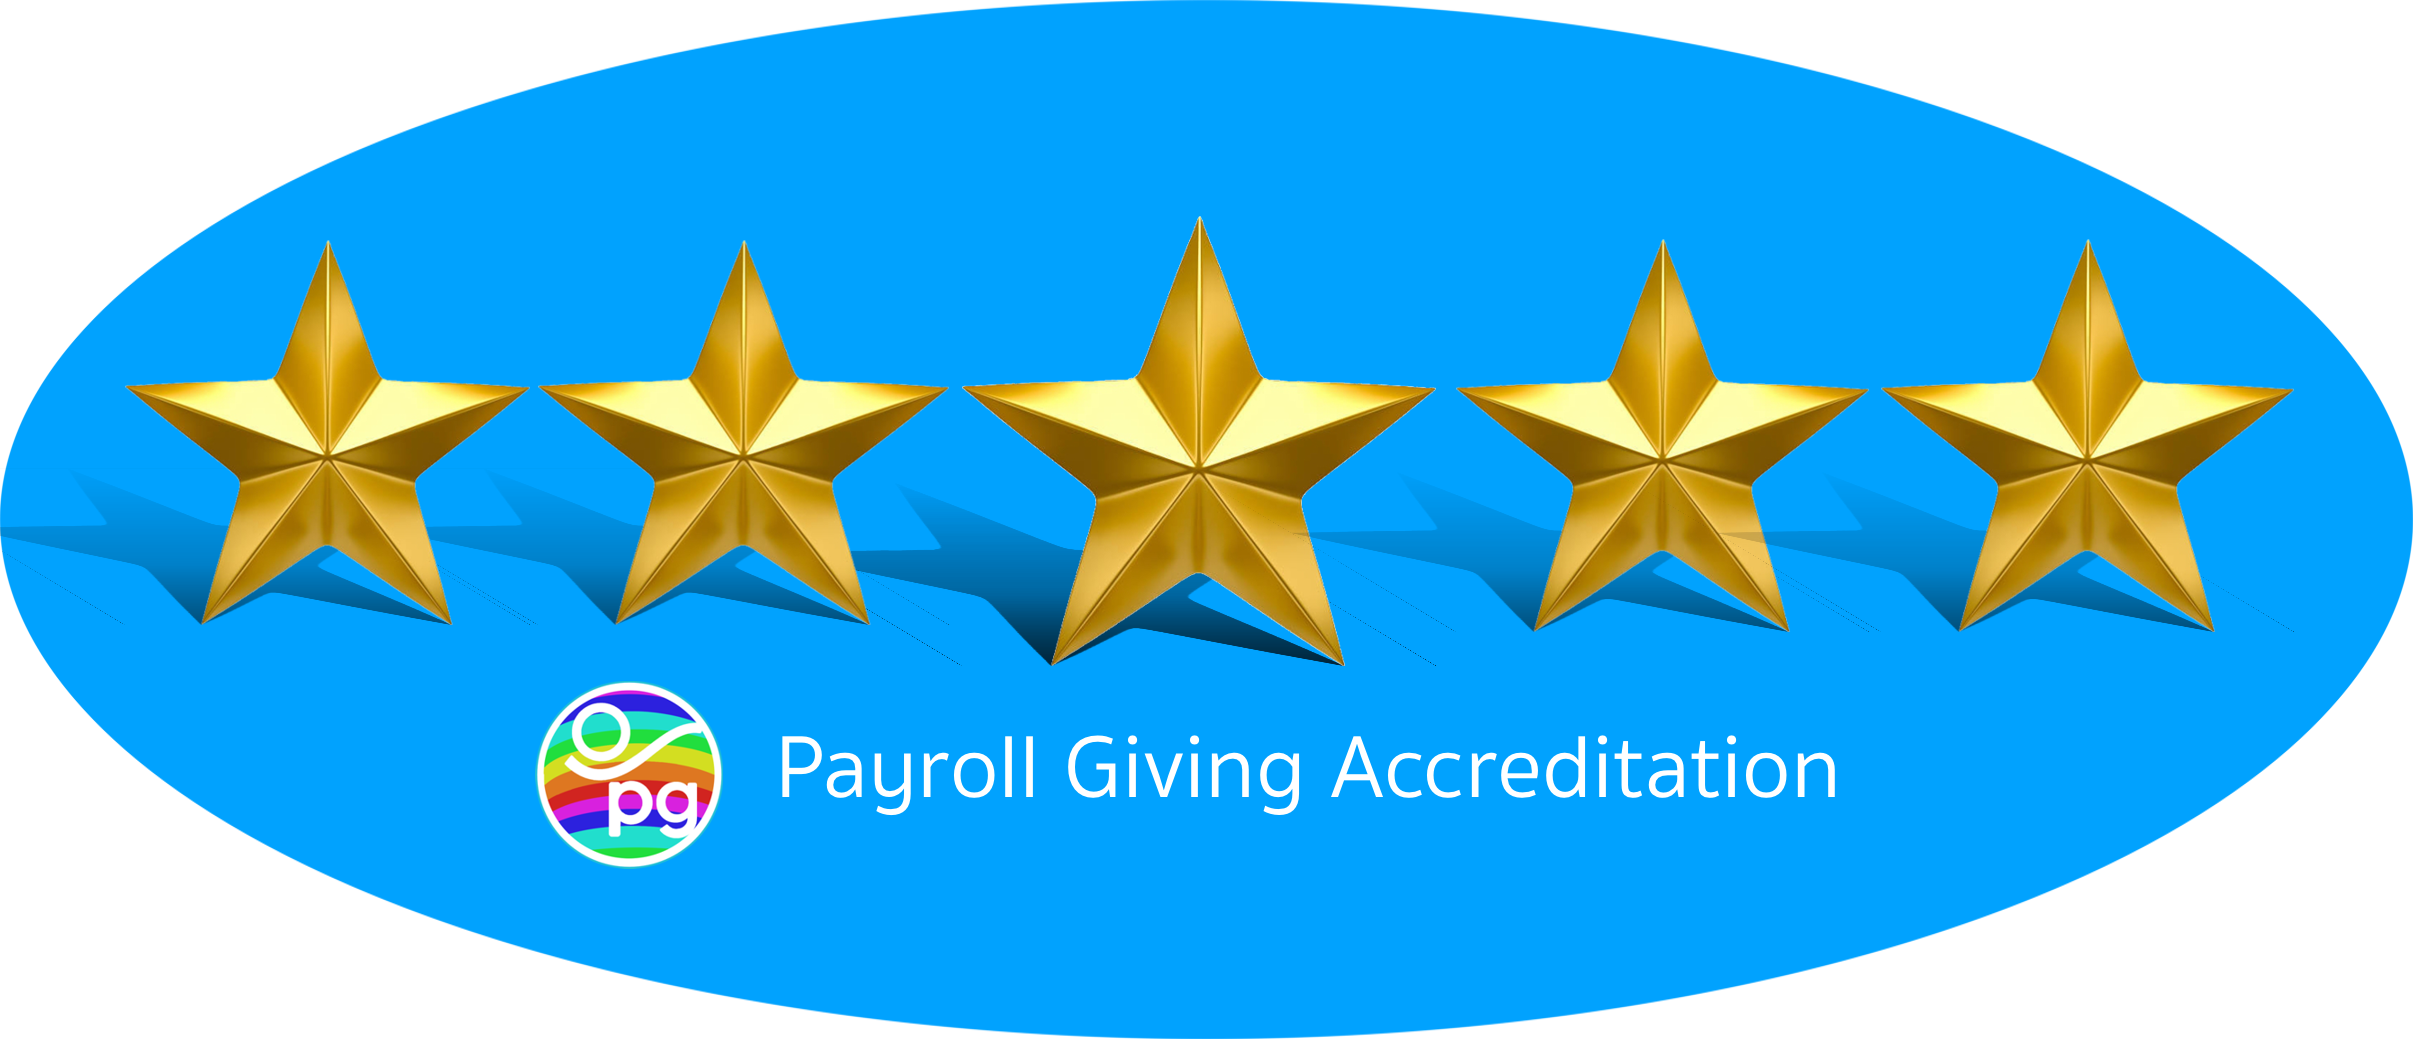 Payroll Giving Accreditation - 5 stars